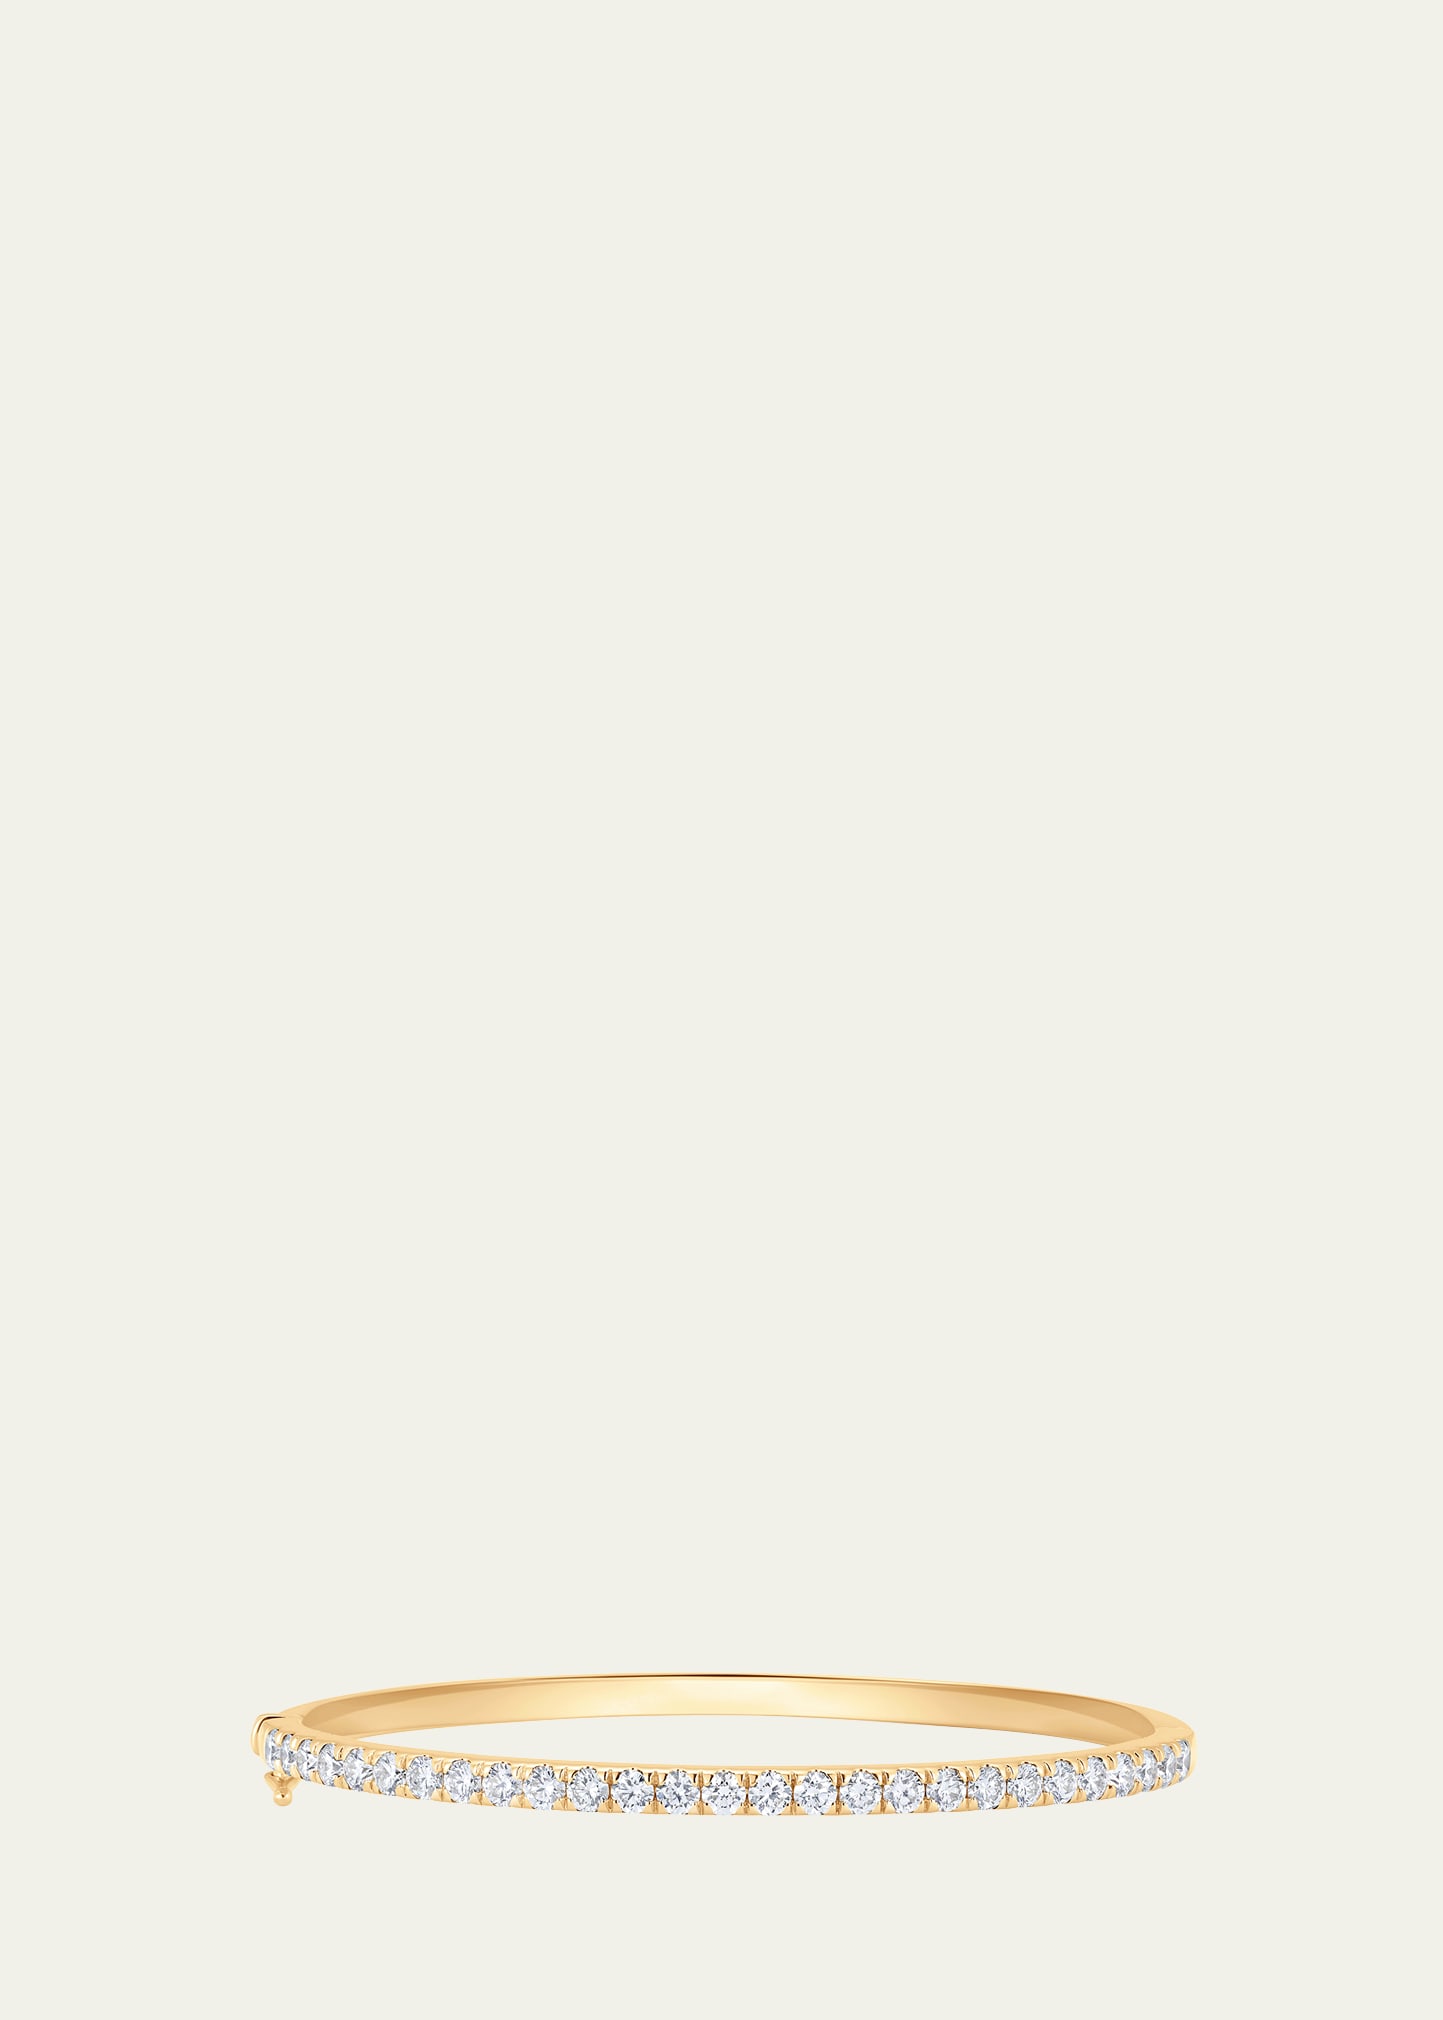 18K Yellow Gold Single Row Diamond Bangle Bracelet